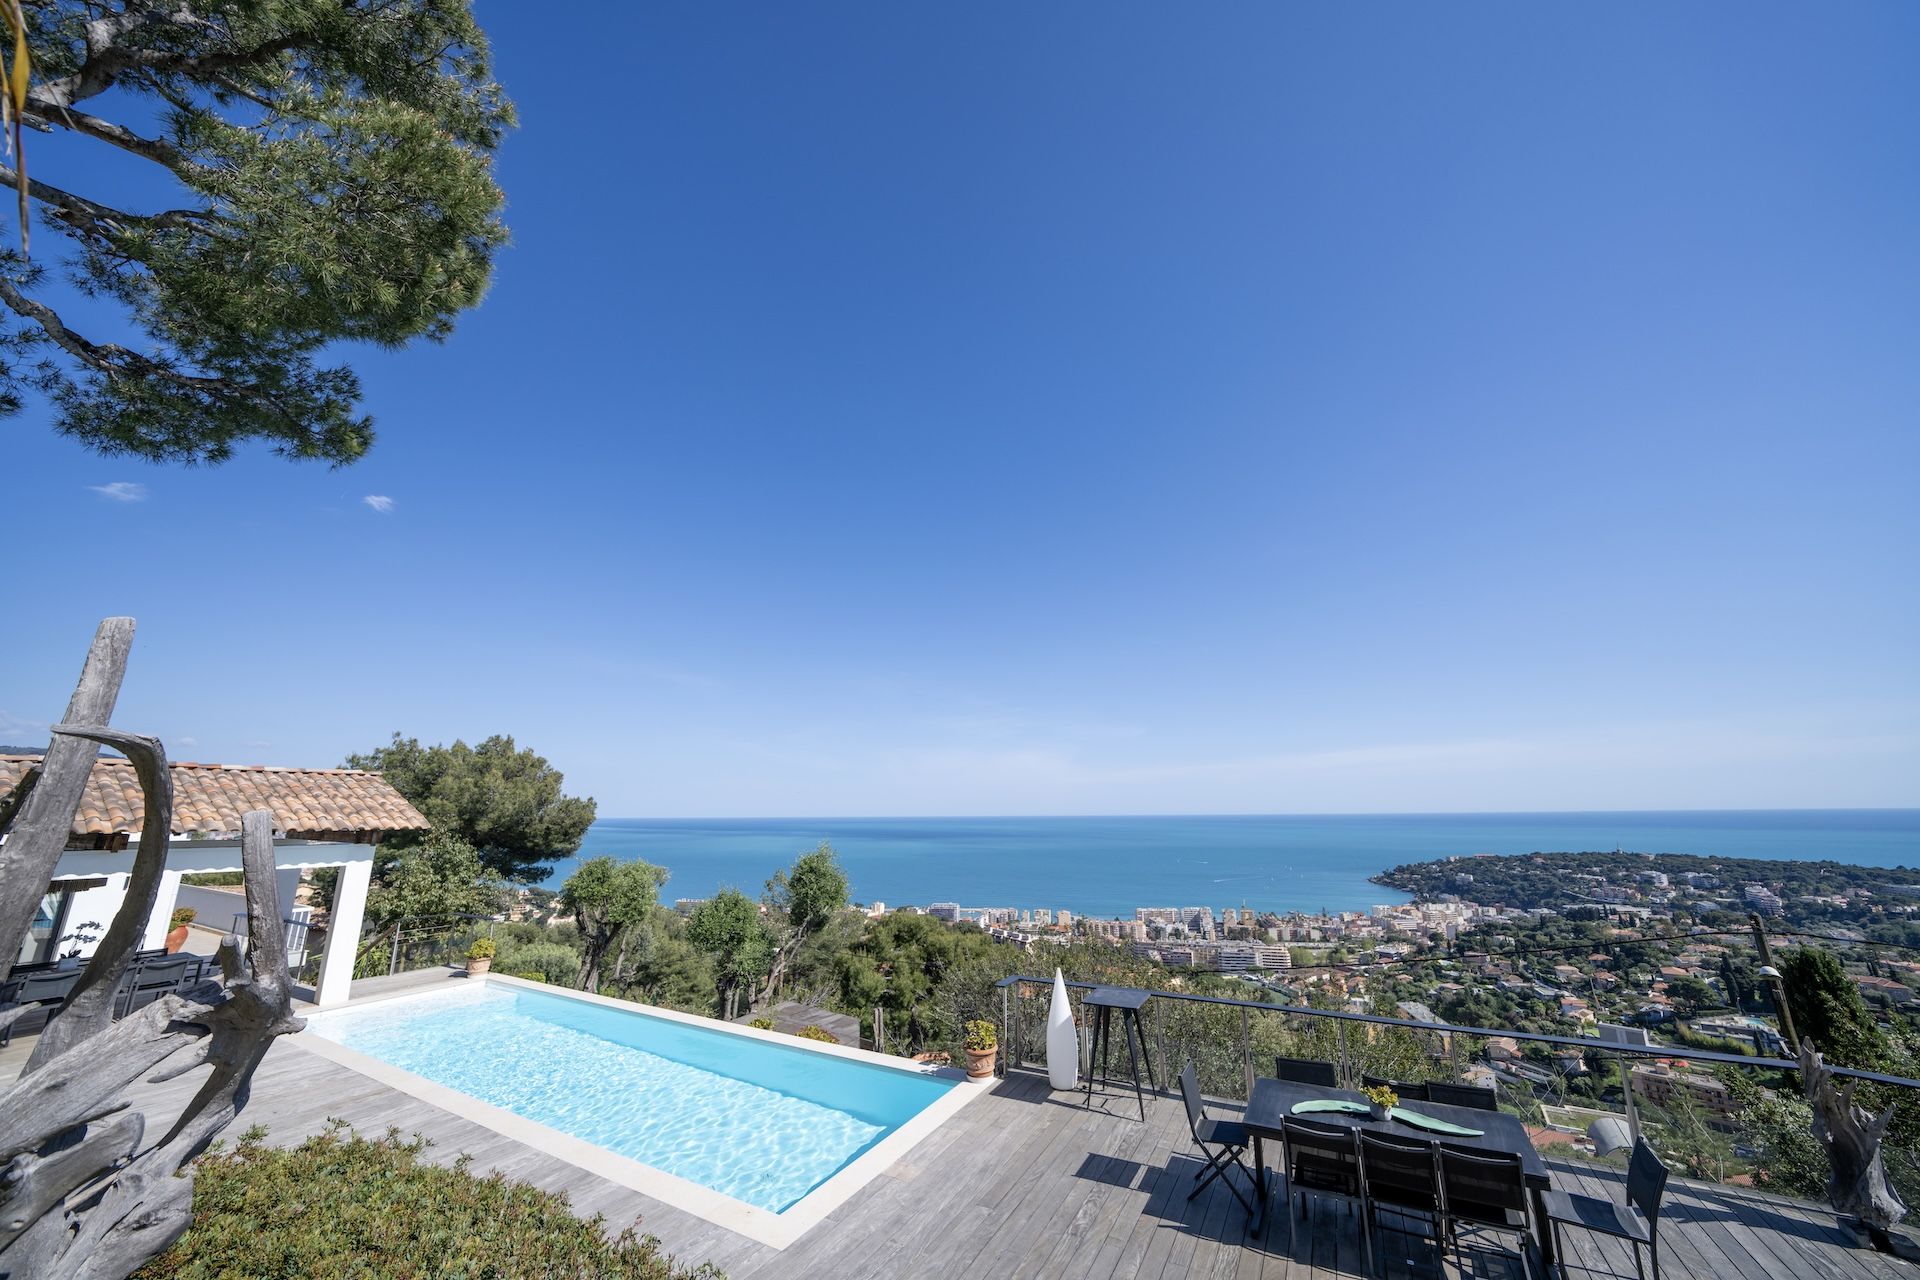 Méditerranée Location Villa with Private pool in Roquebrune-Cap-Martin, Côte d'Azur